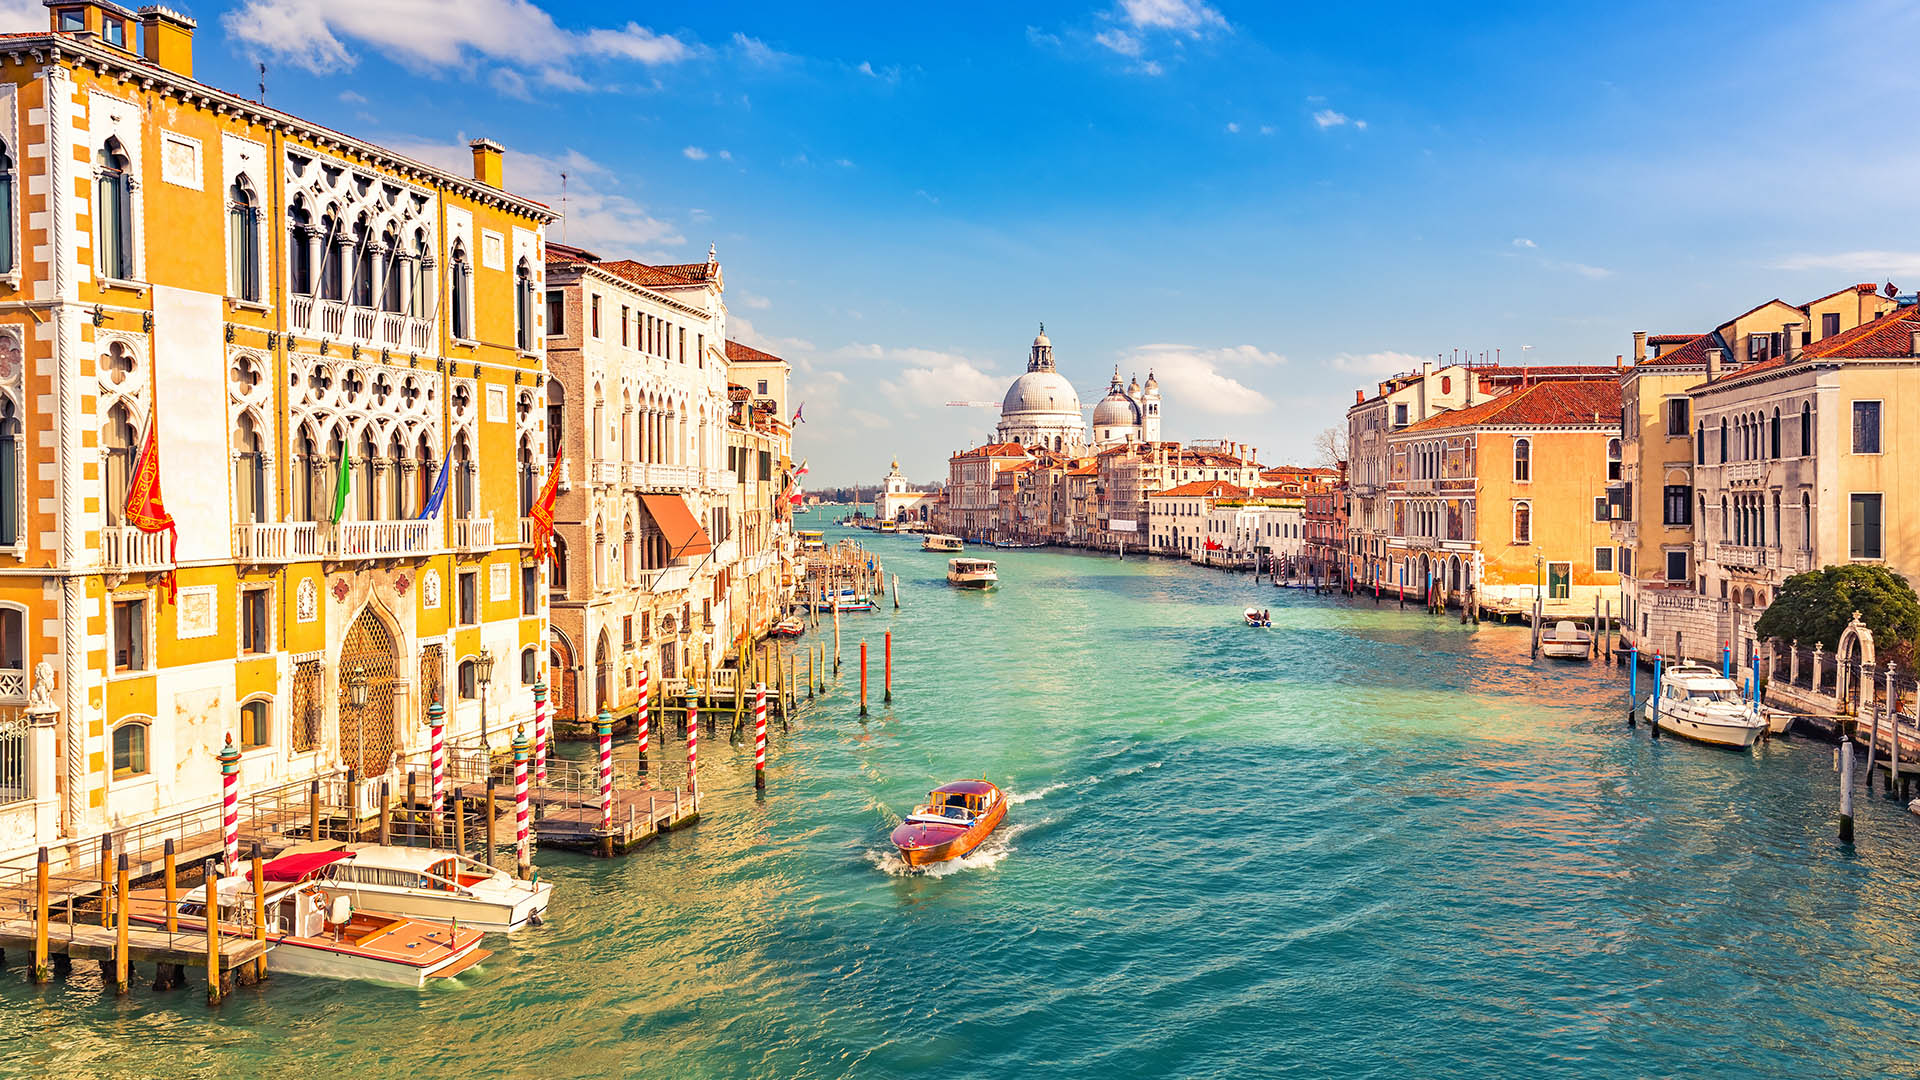 Canal Grande und Basilika Santa Maria della Salute in Venedig, Städtereise nach Venedig mit Flug & Hotel